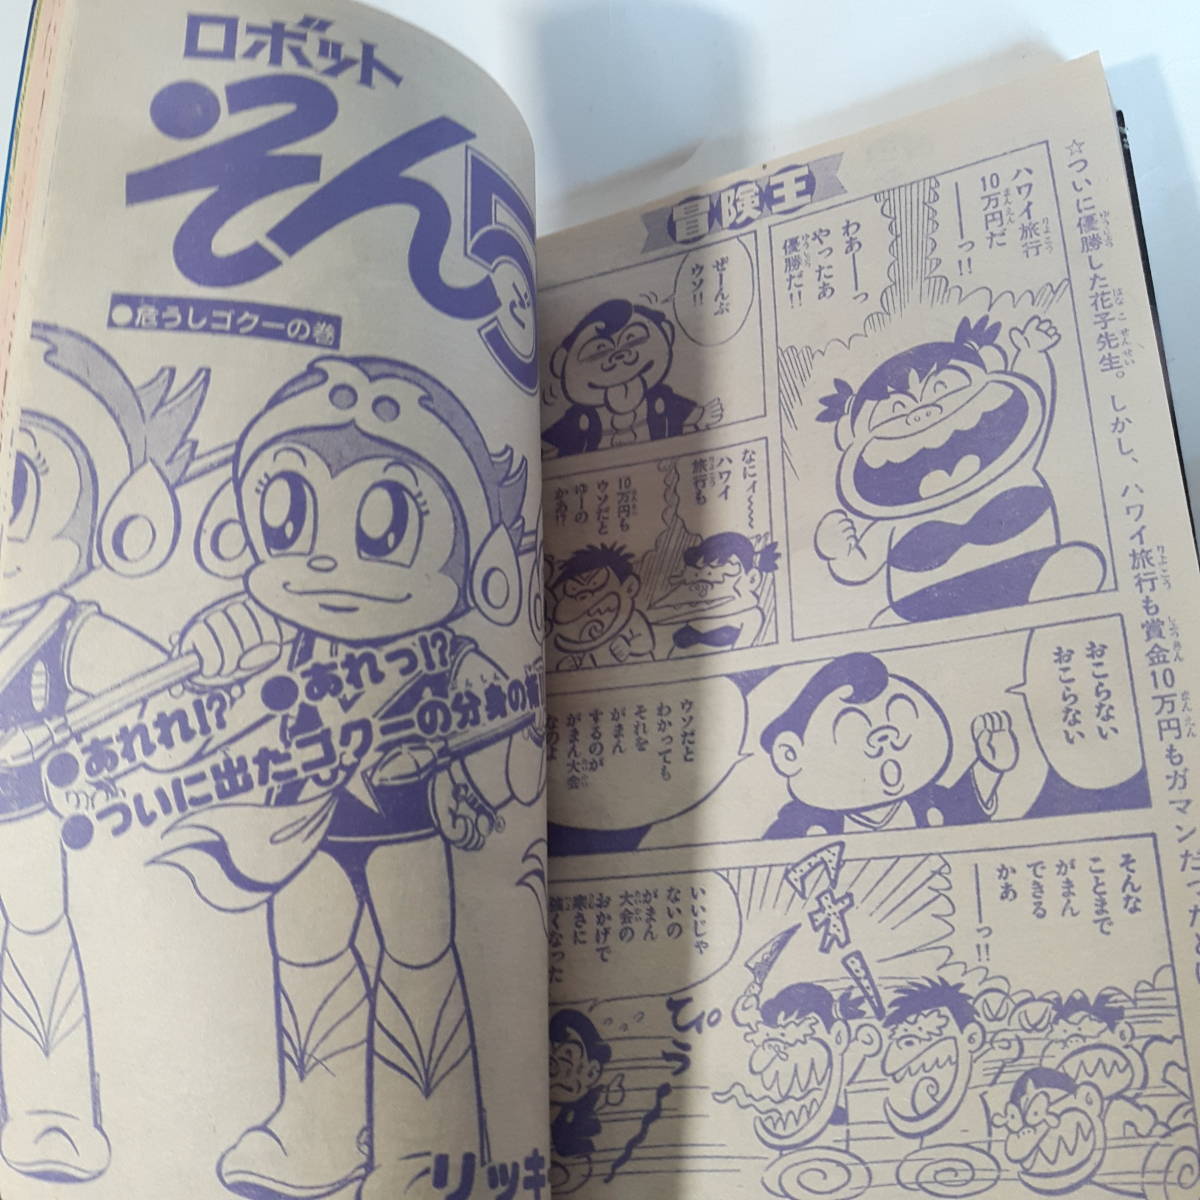 5702-7 T 冒険王 １９８１年 ２月号 秋田書店 の商品詳細 | Yahoo 